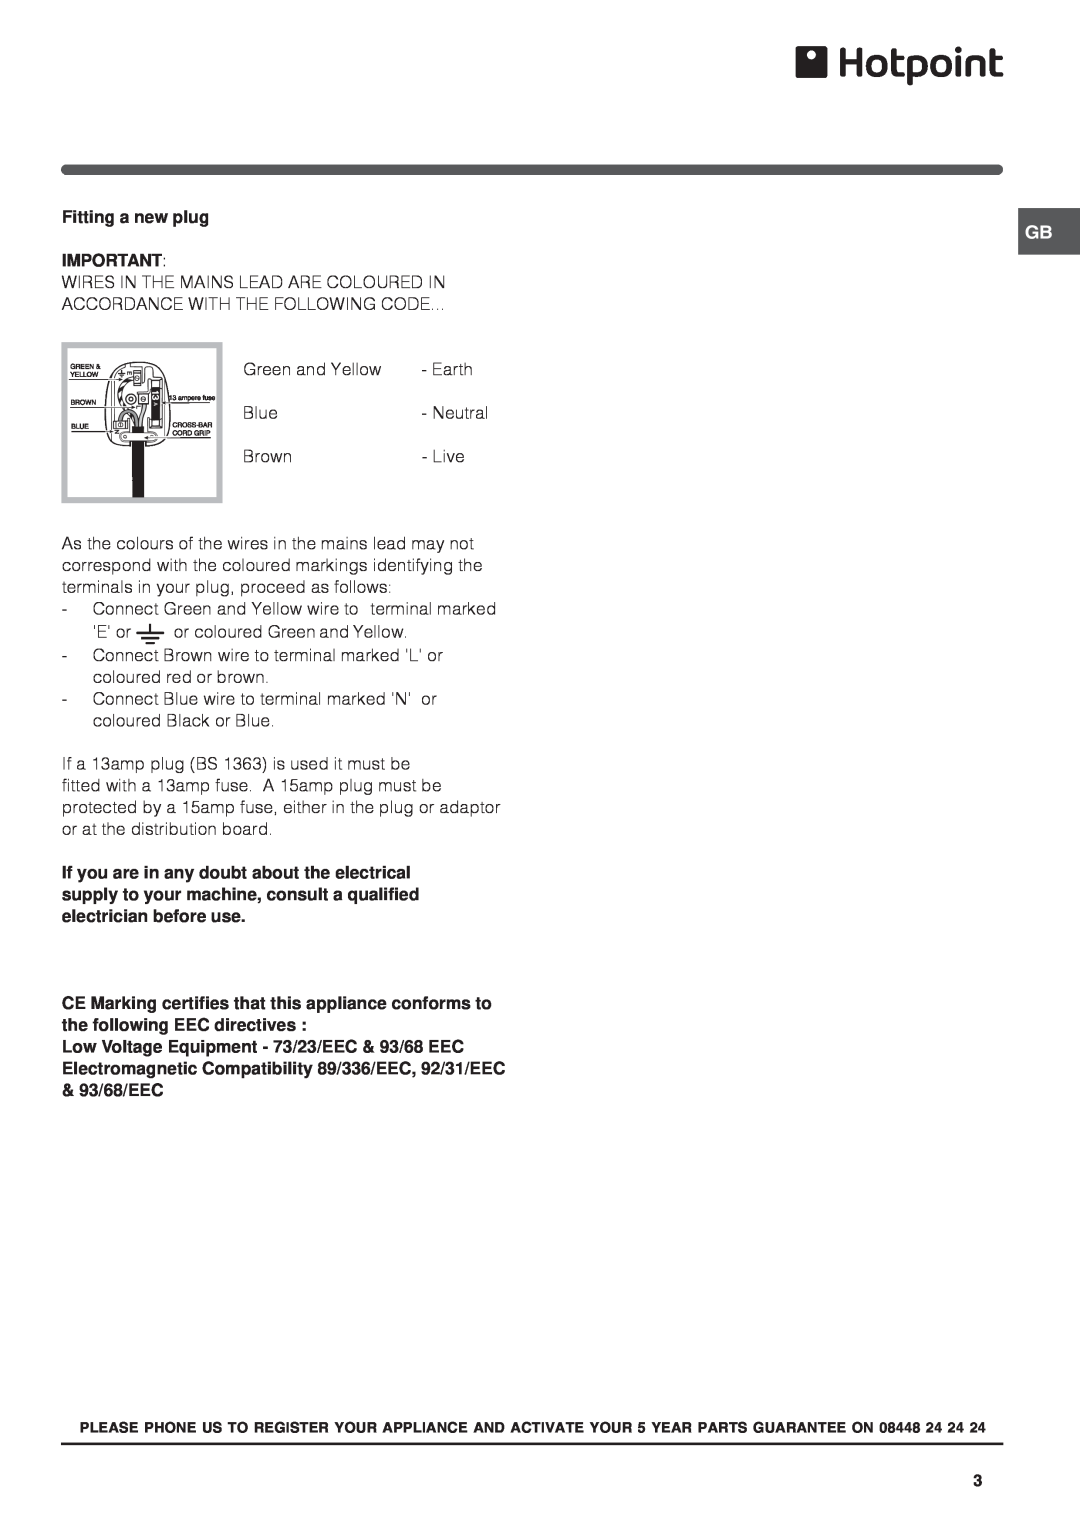 Hotpoint RFA52 manual 